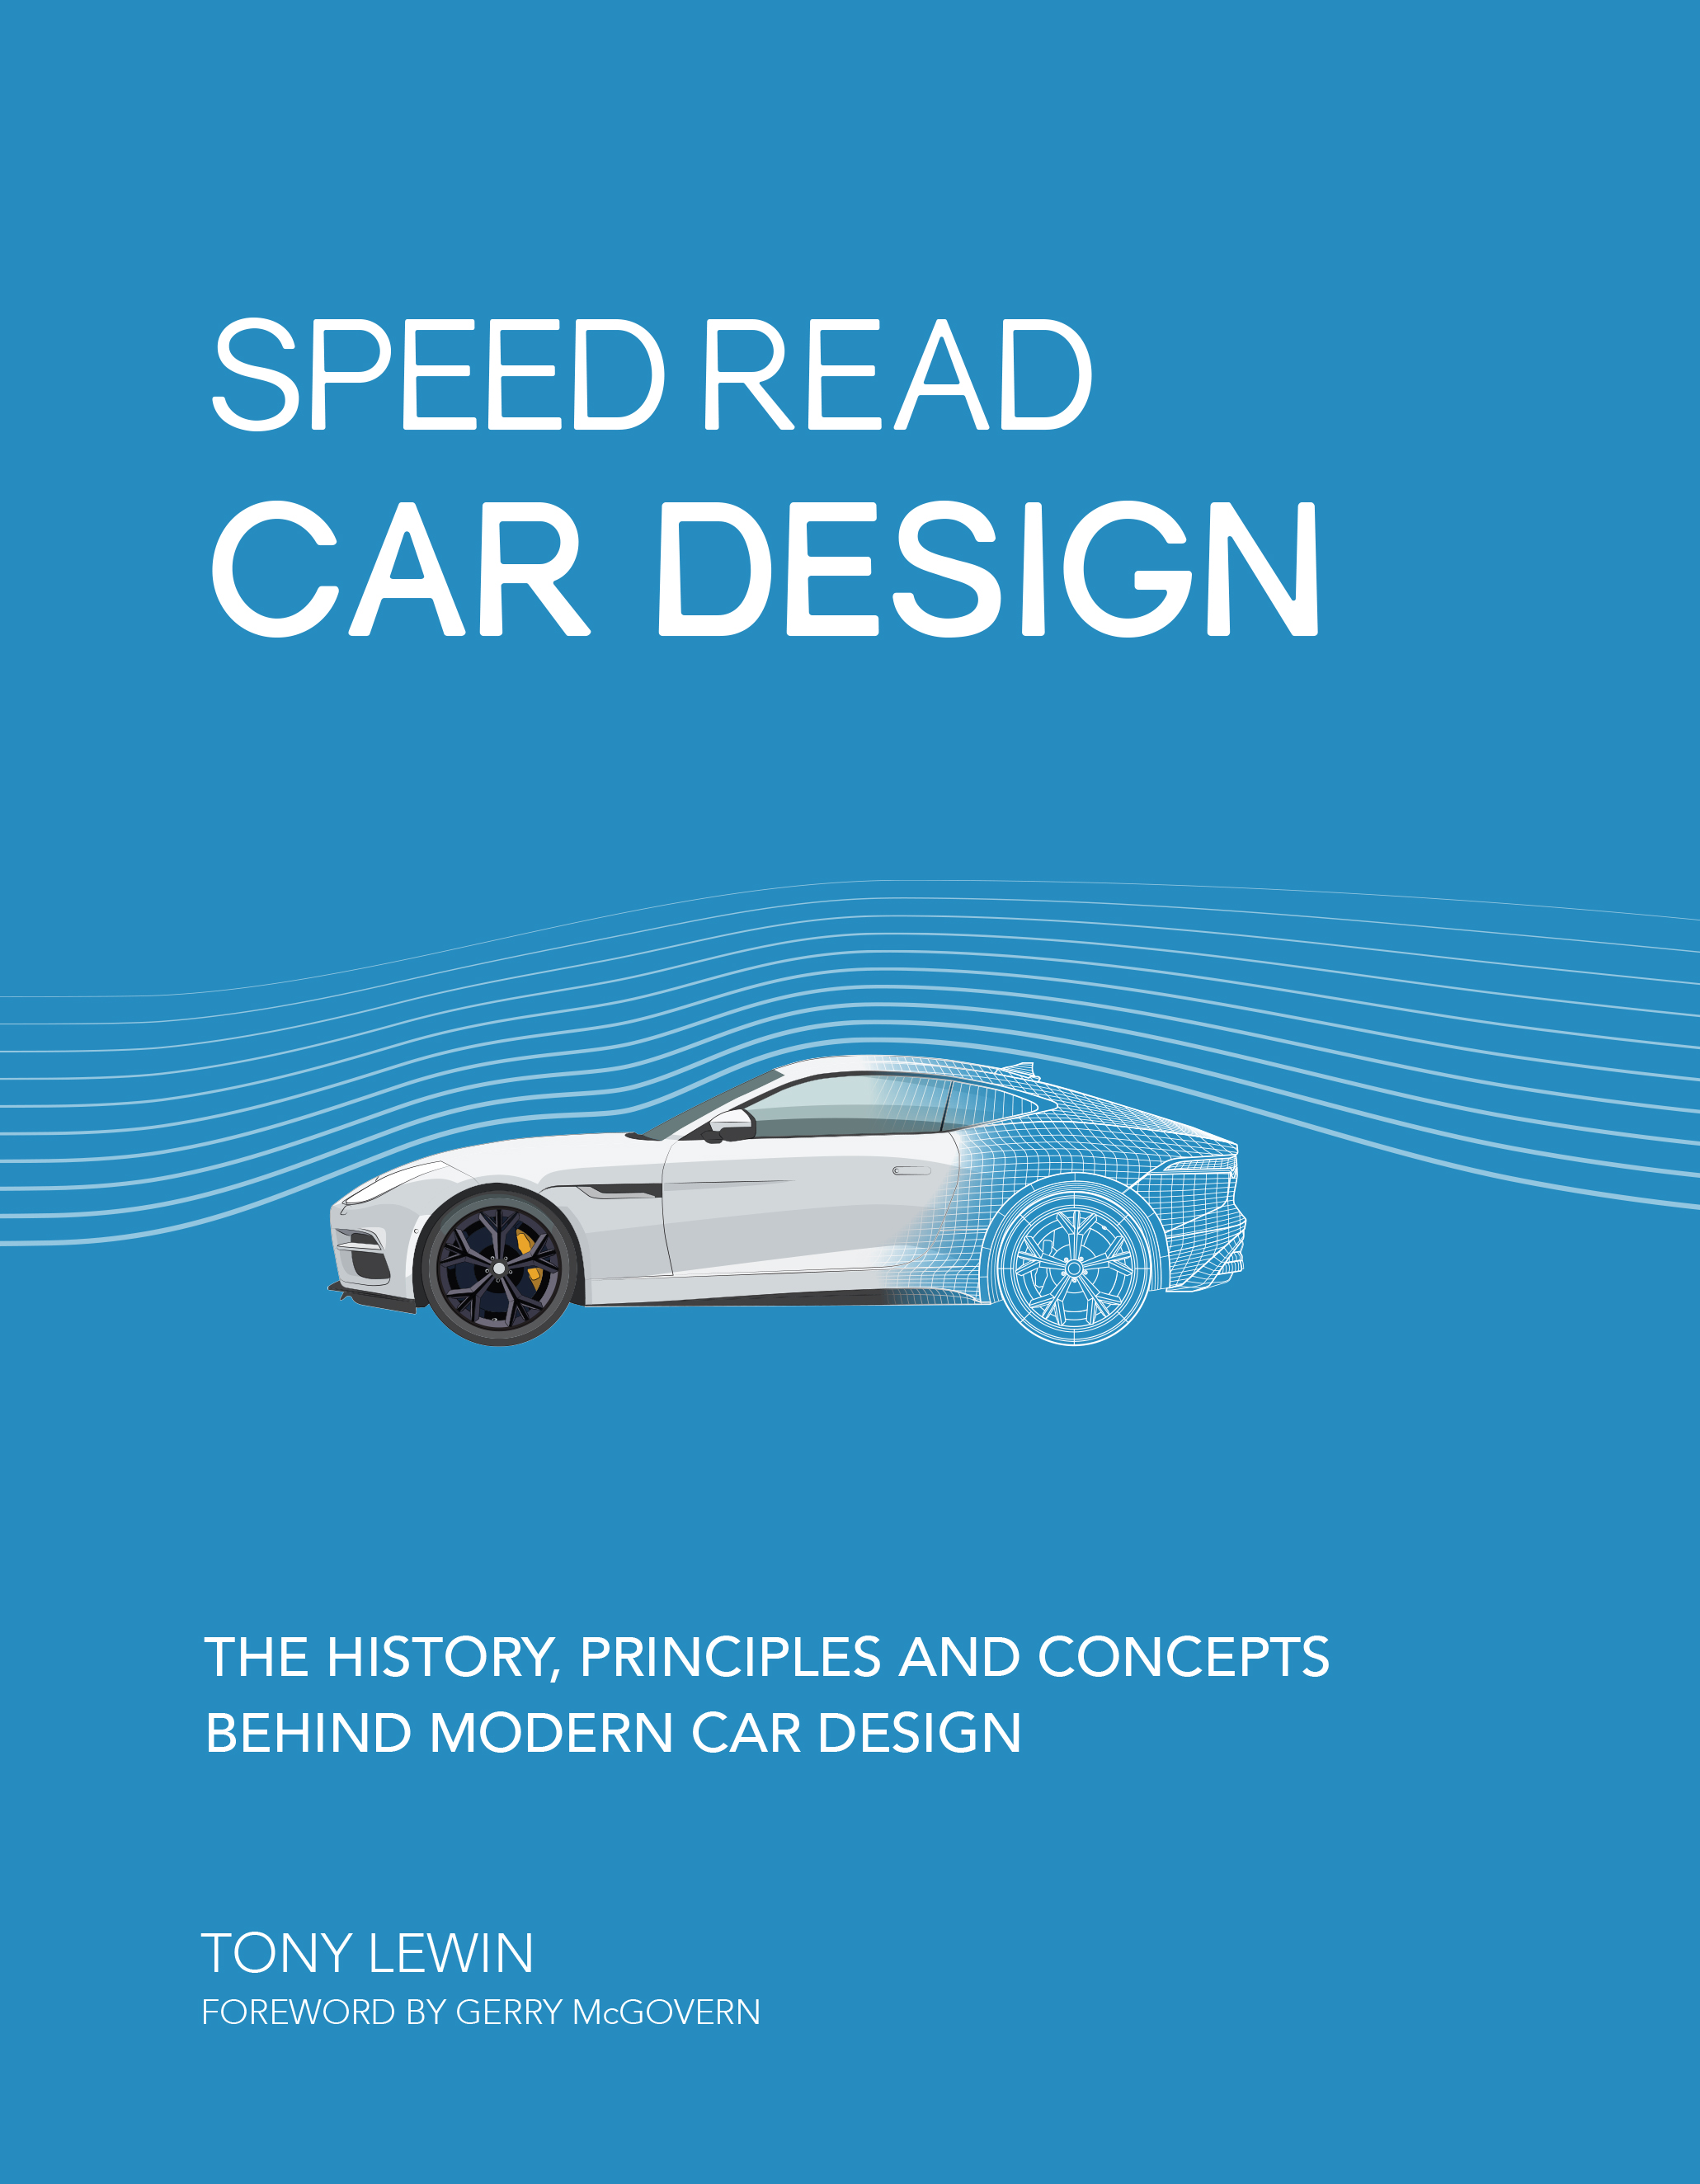 Car design, Car design explained in bite-size servings, ClassicCars.com Journal